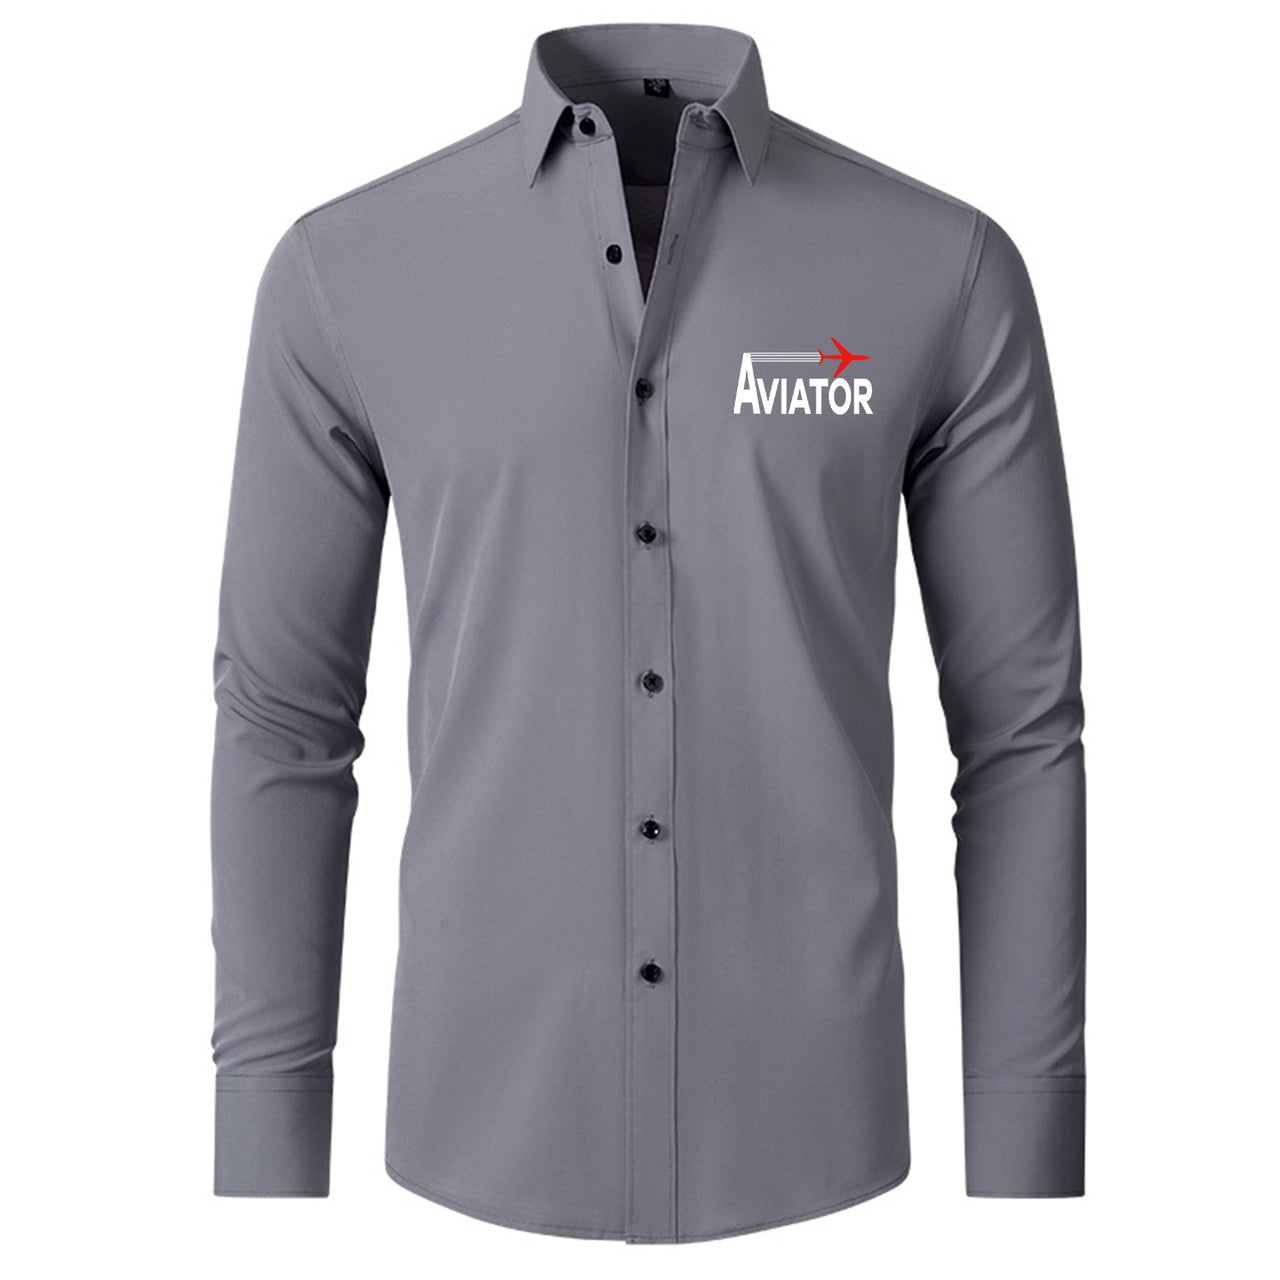 Aviator Designed Long Sleeve Shirts